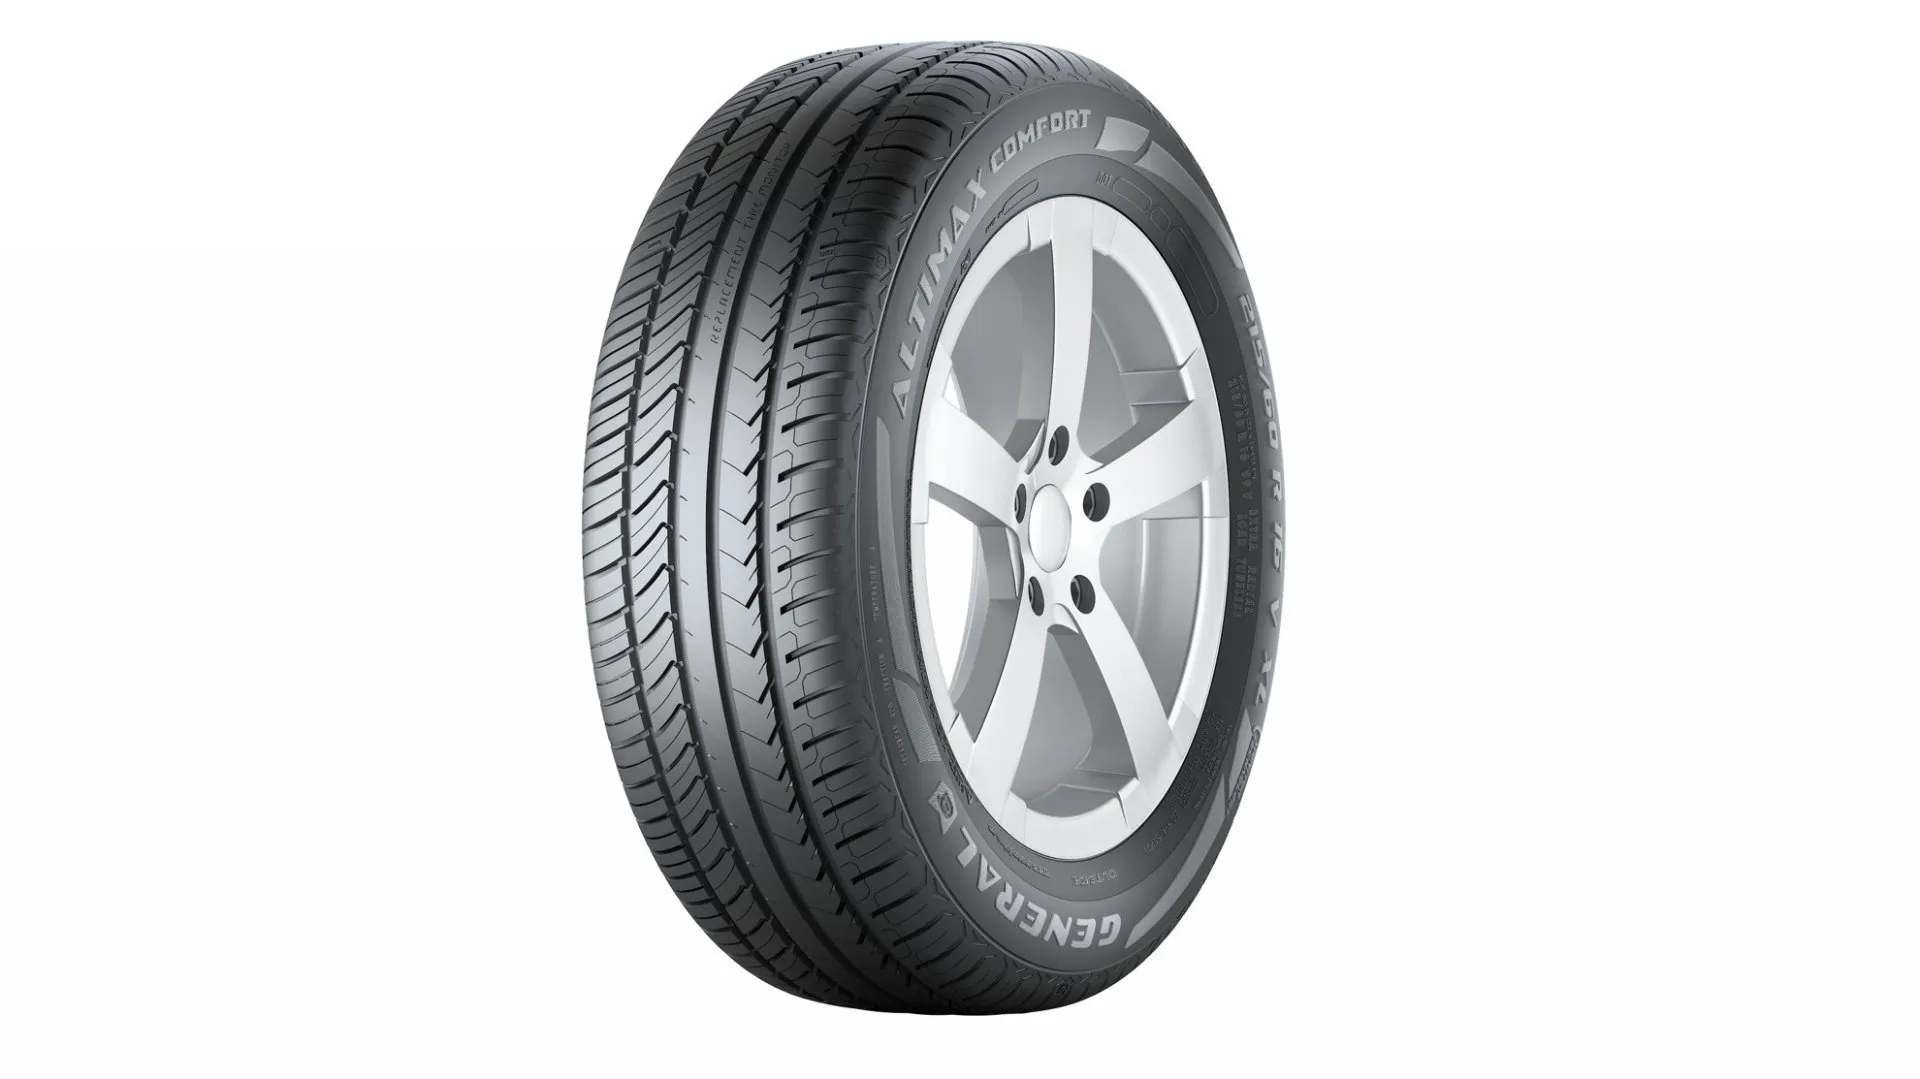 General Tire Altimax Comfort 145/80R13 75T